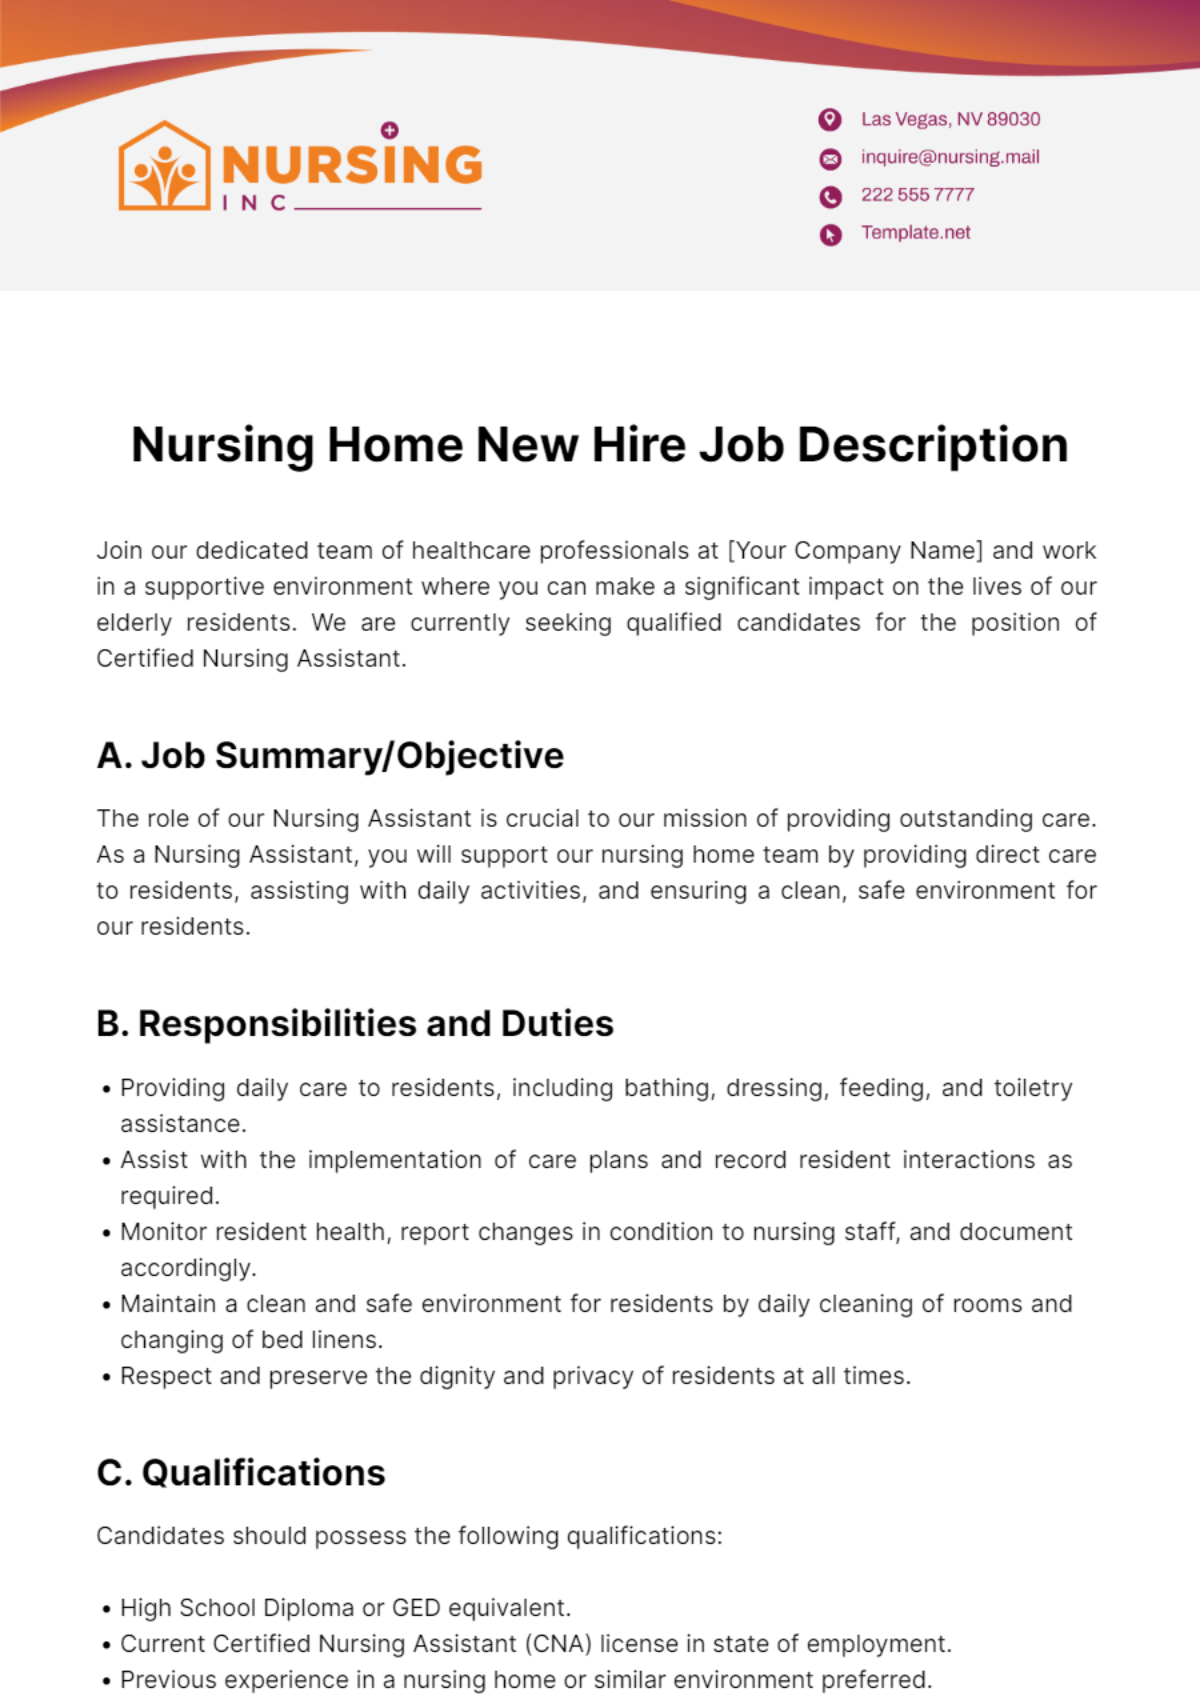 Nursing Home New Hire Job Description Template